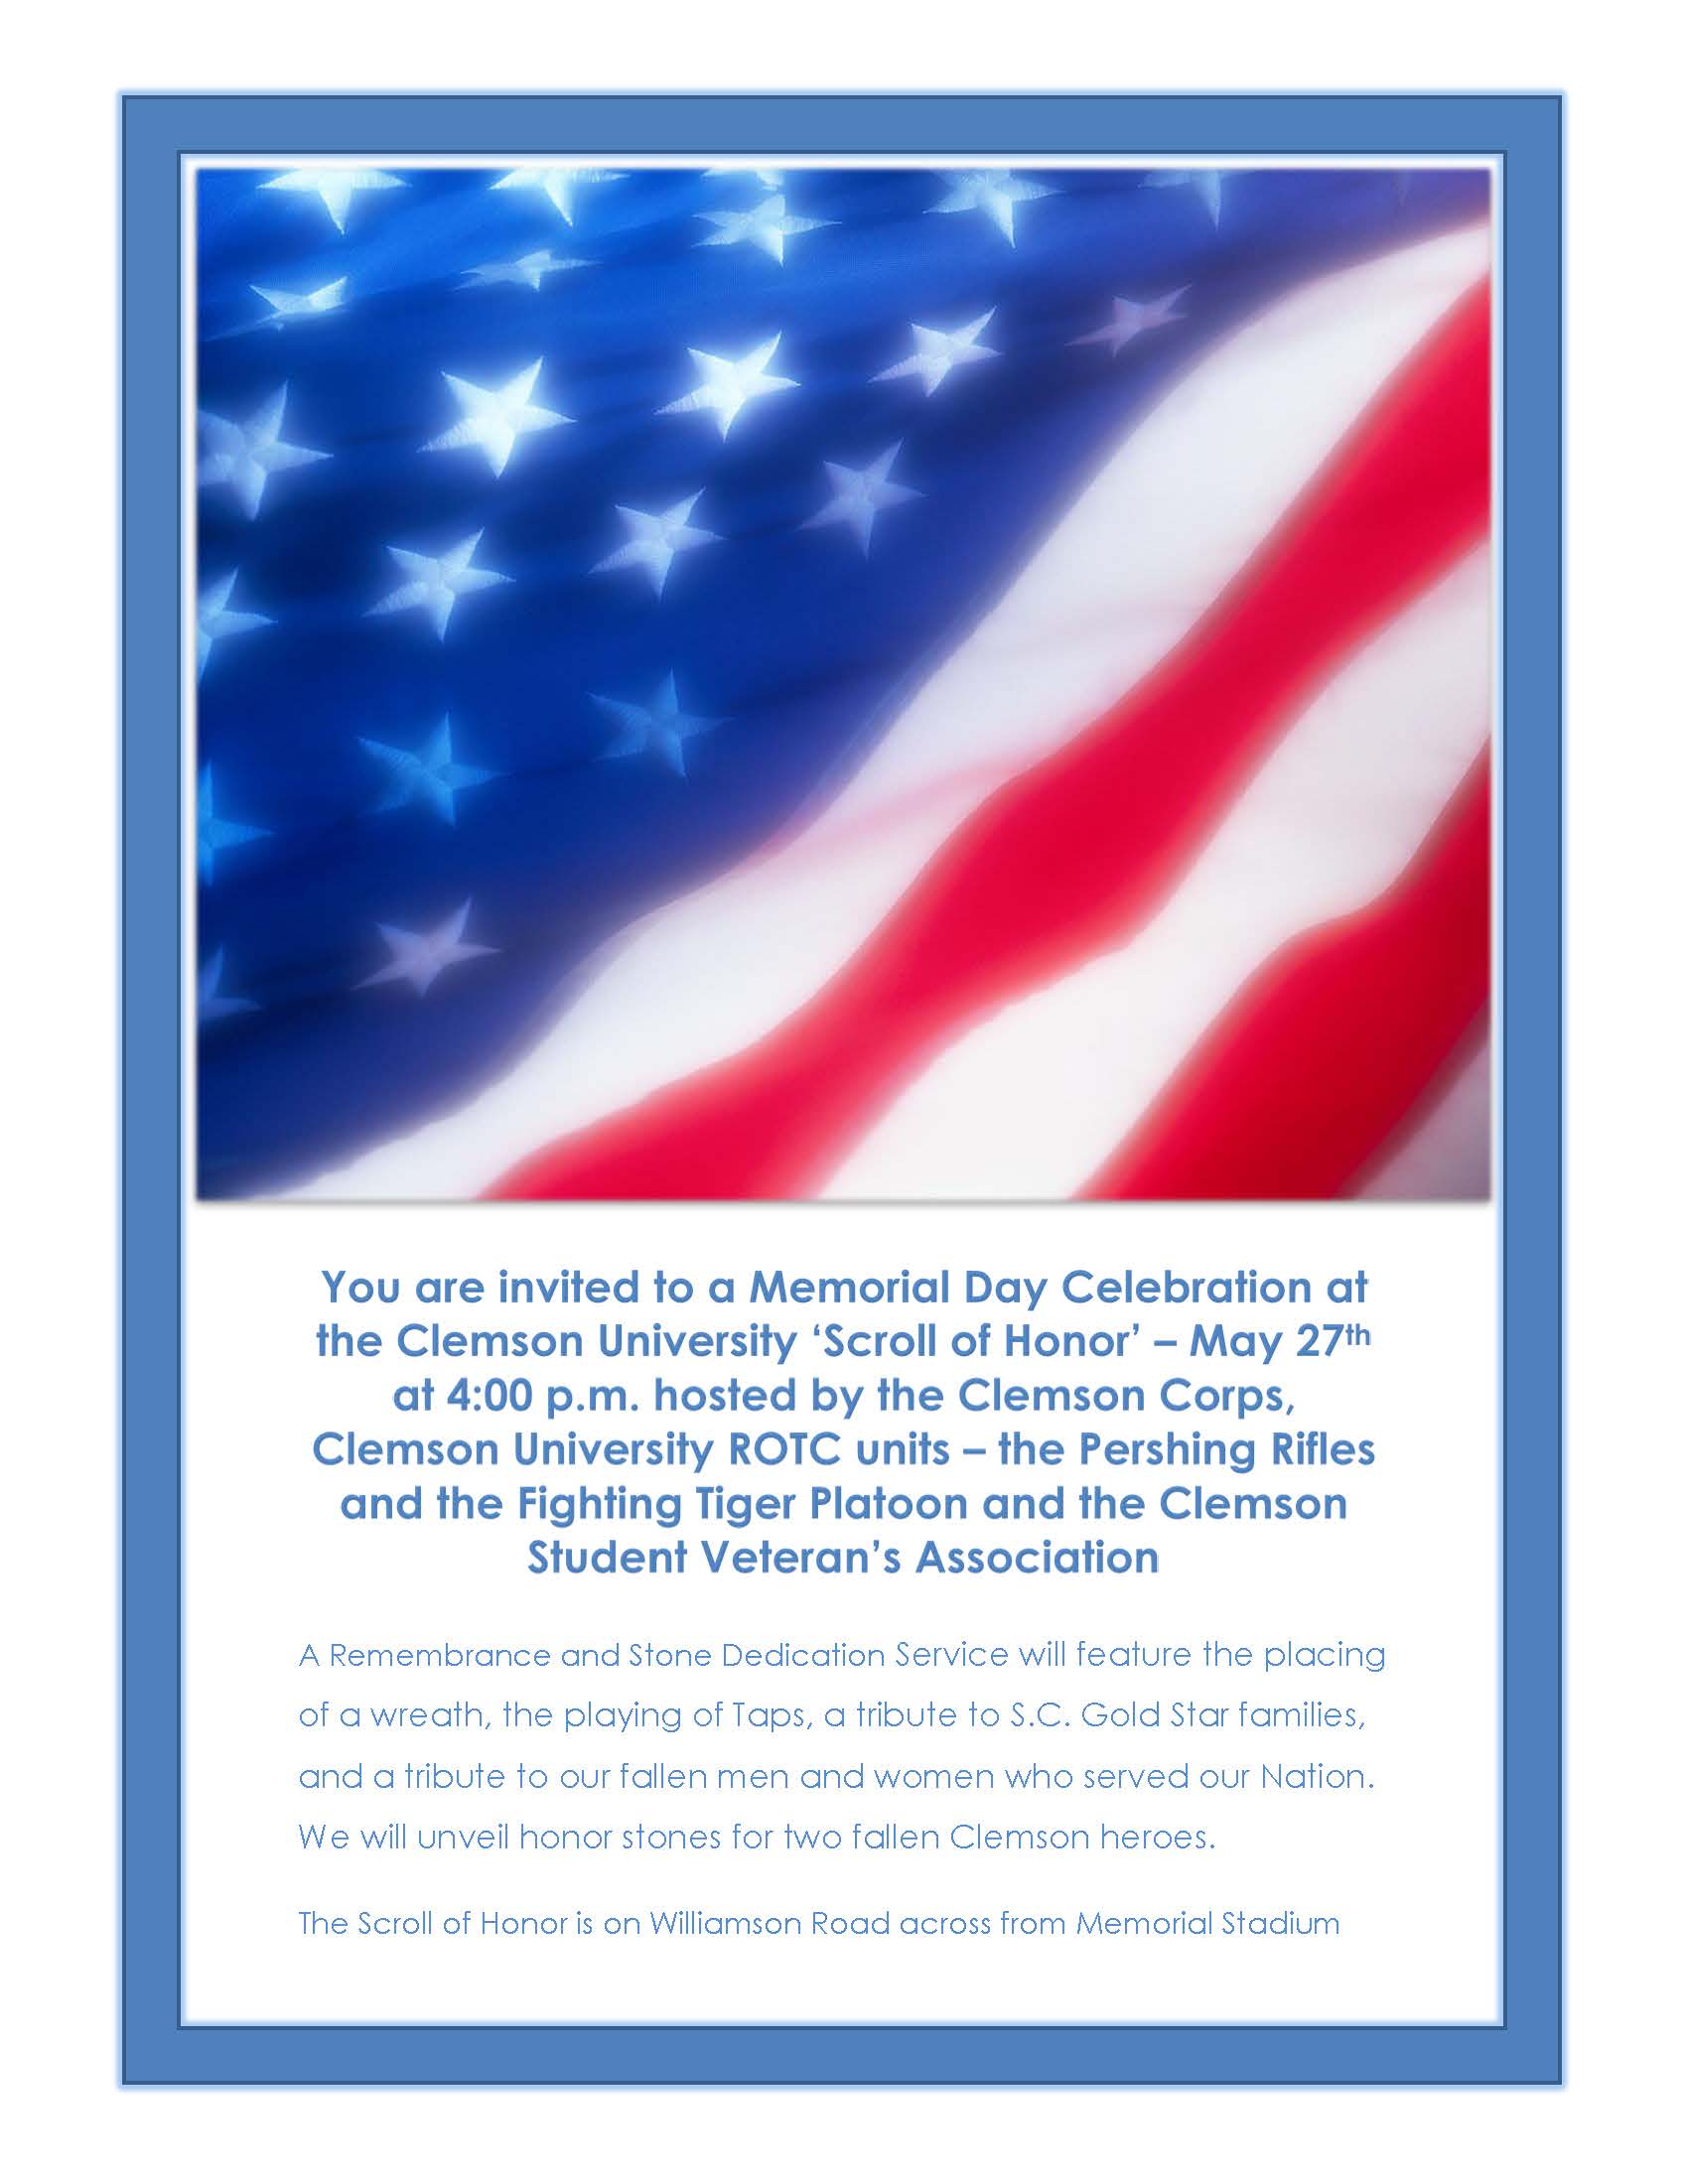 Clemson University Memorial Day Celebration